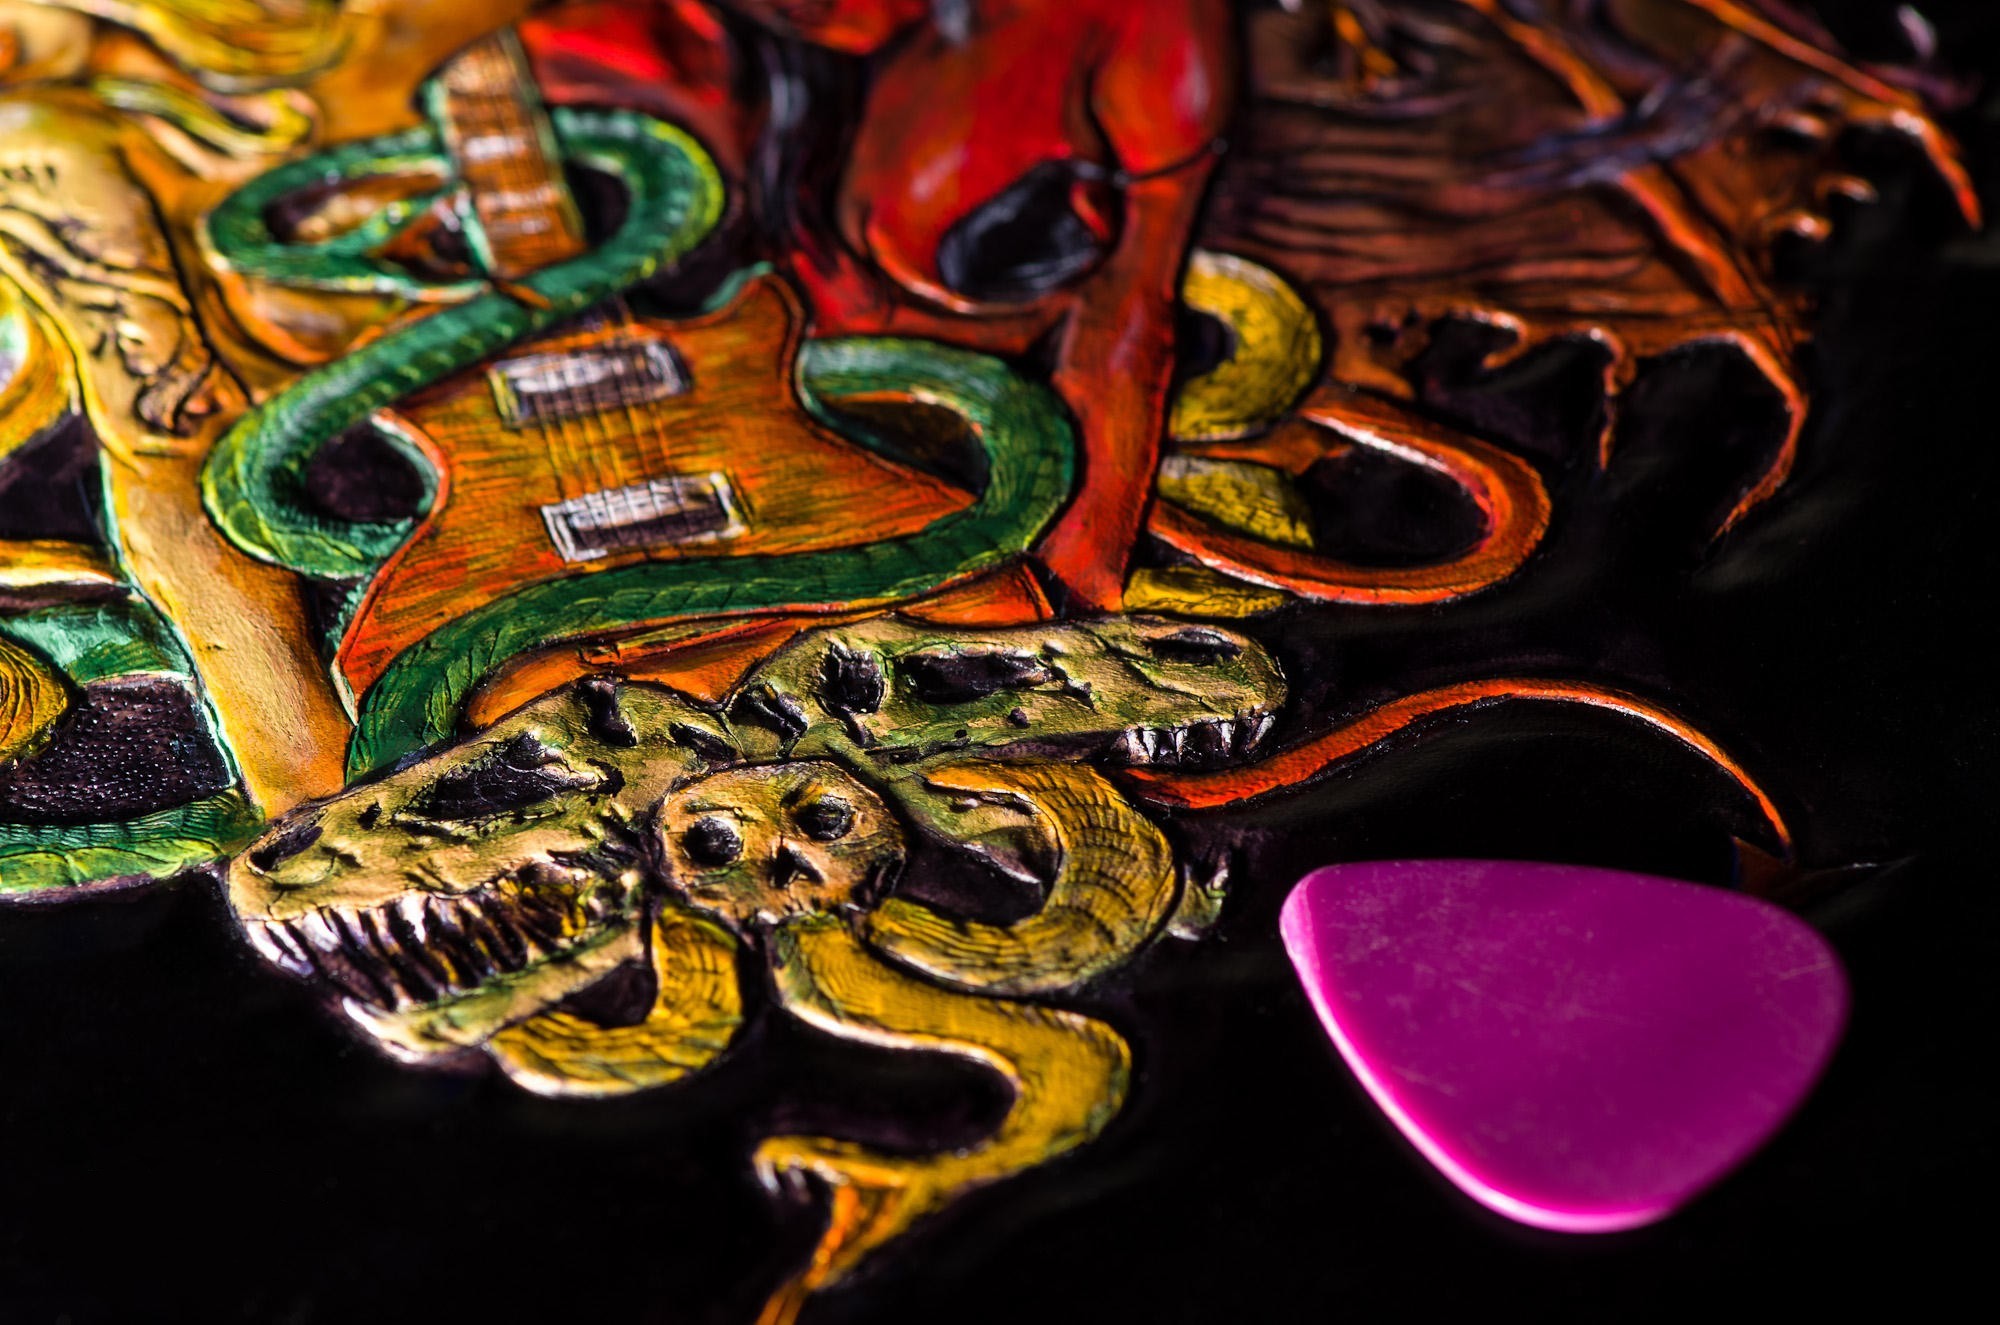 General 2000x1325 hard rock rock music dinosaurs guitar snake Gibson Slash Apocalyptic Love music closeup